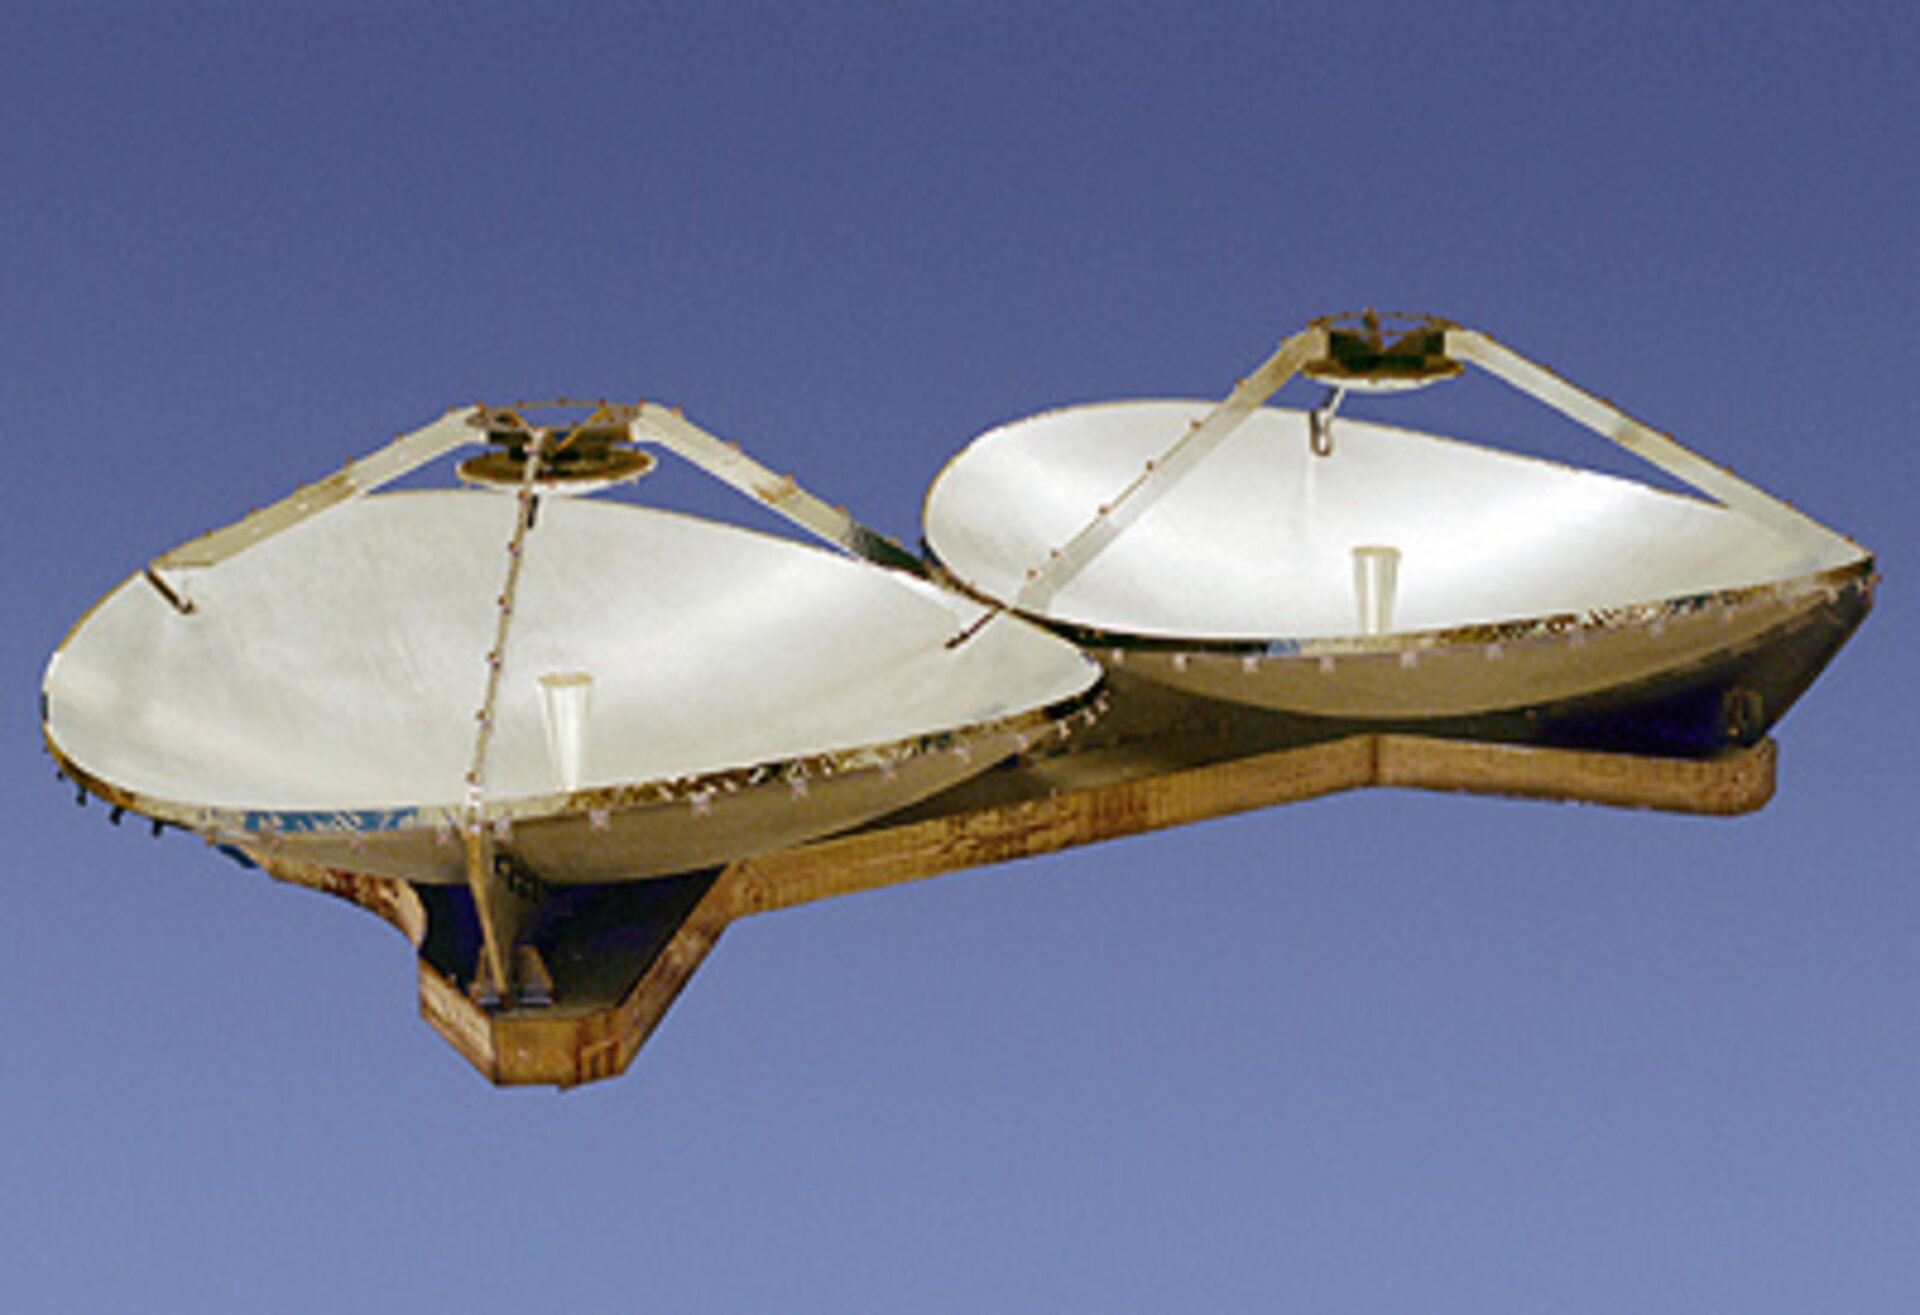 SIRAL antenna sub-system